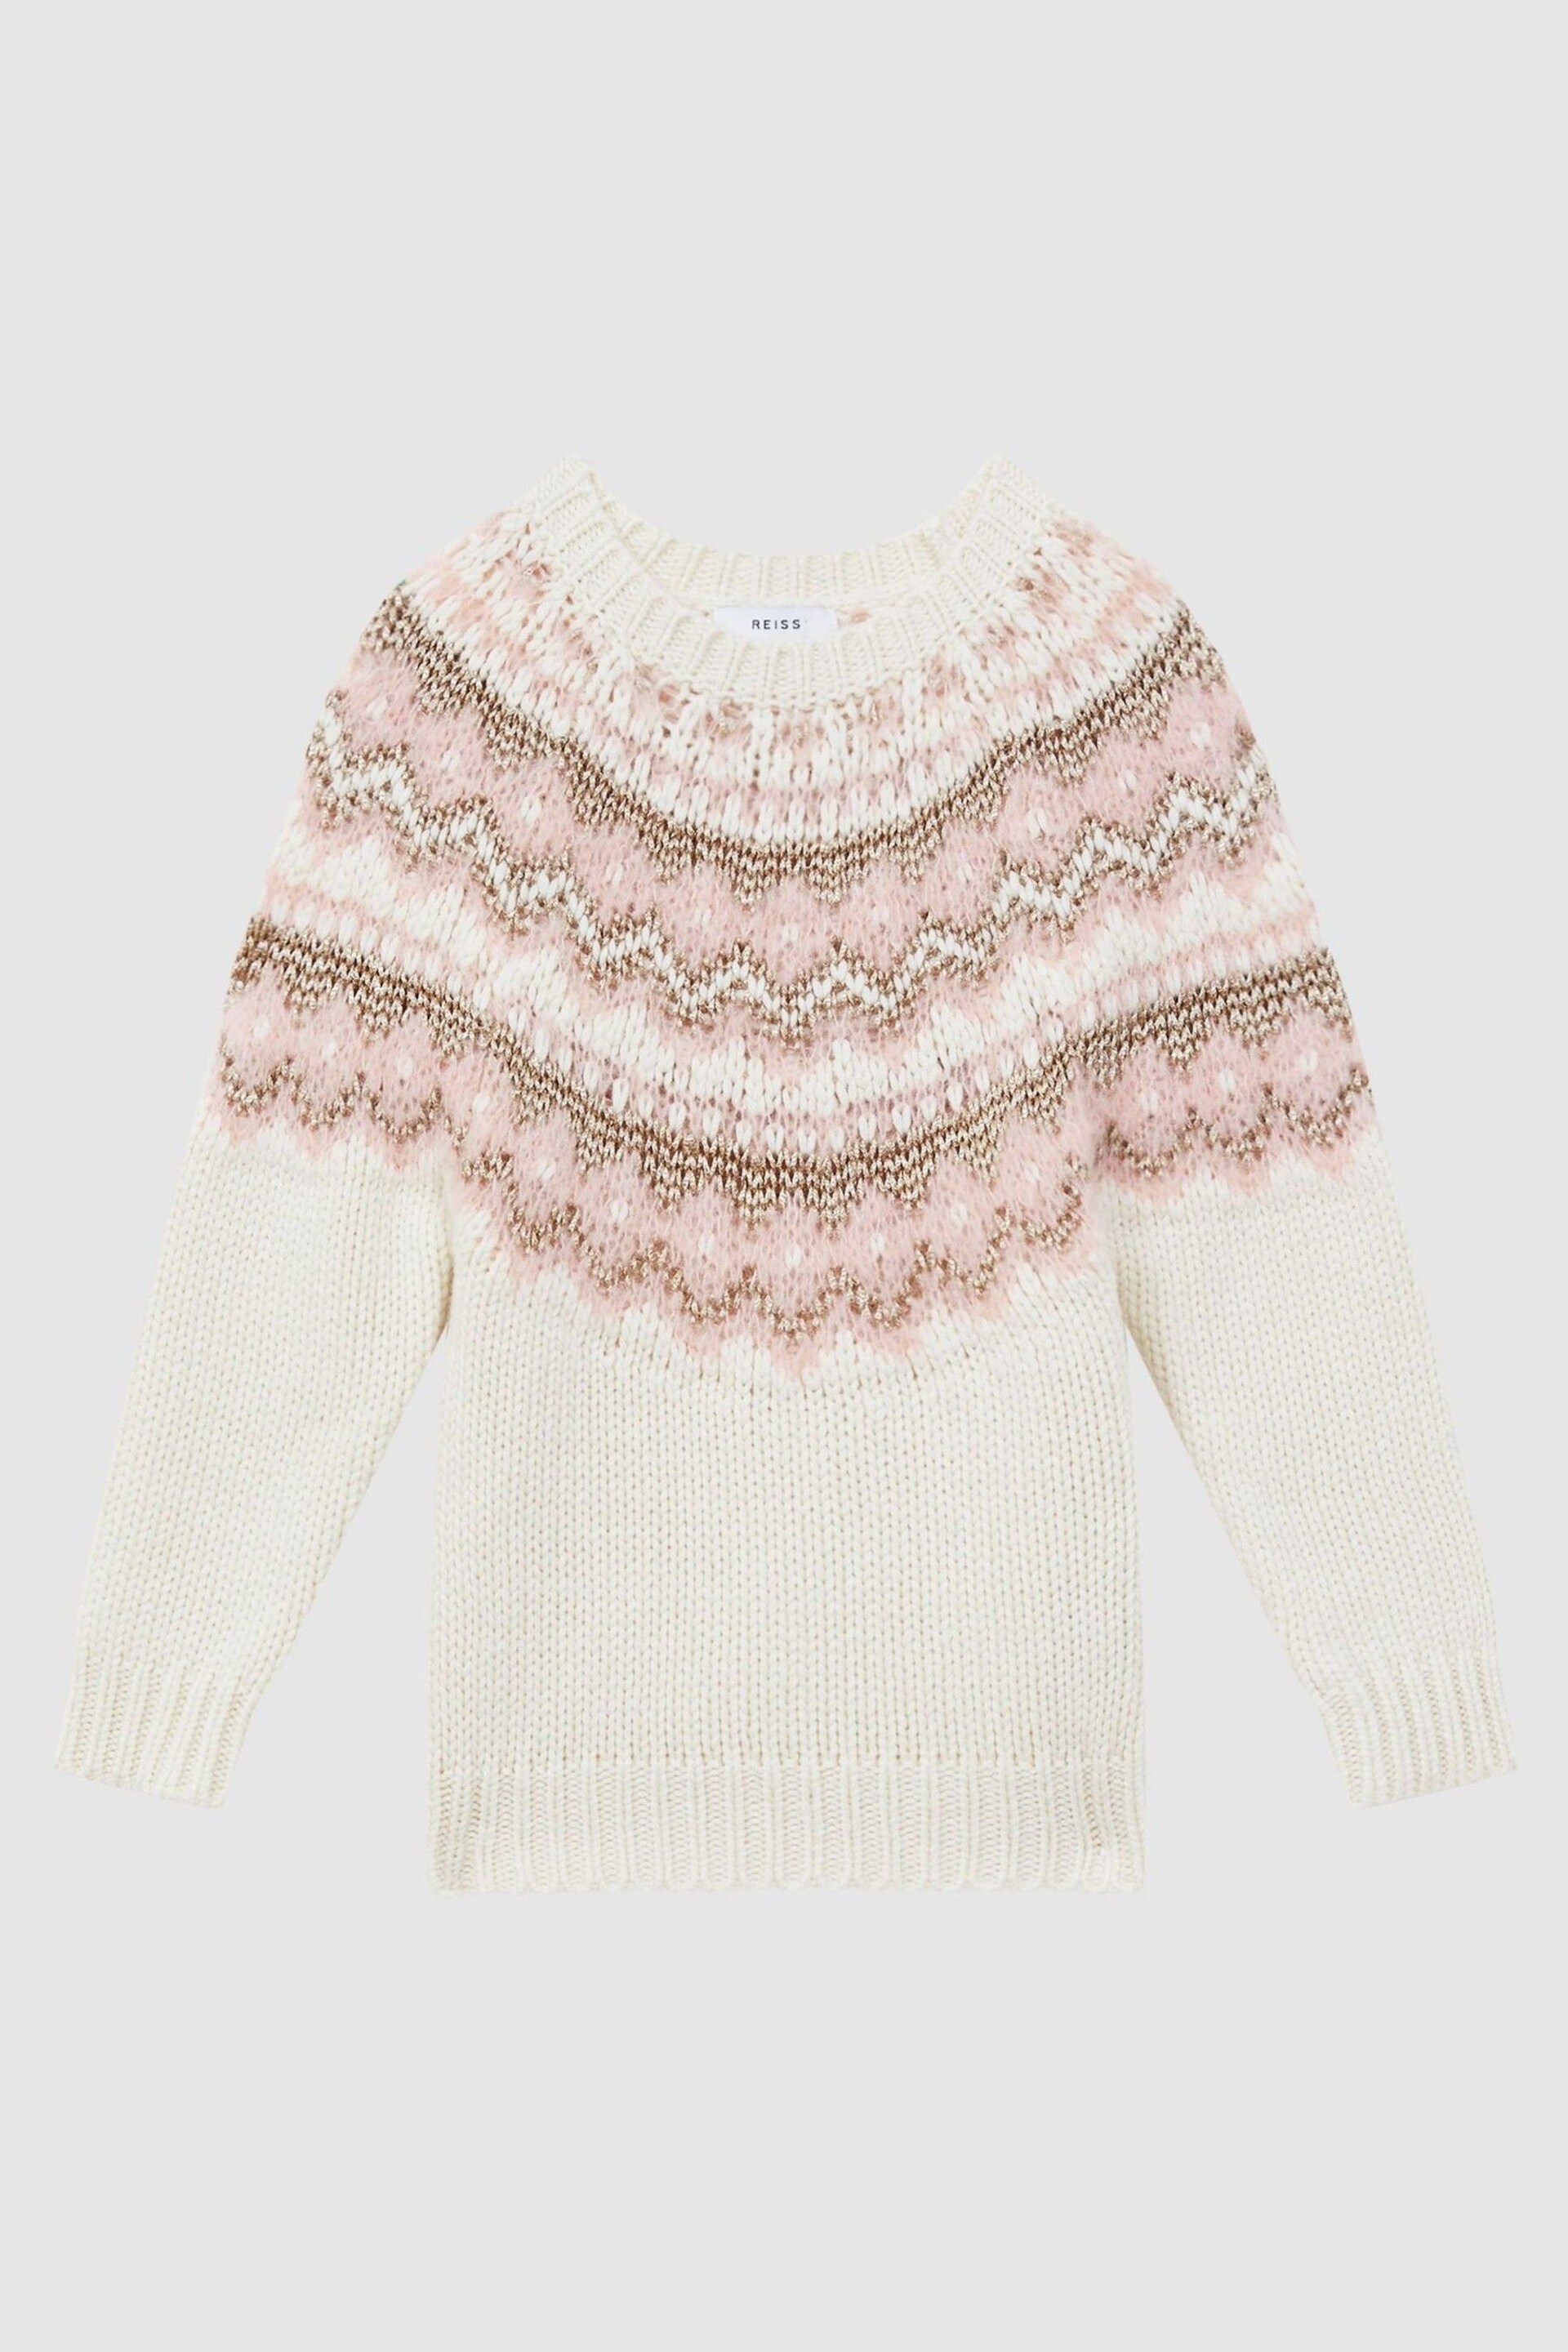 Reiss Pink Blythe Junior Fairisle Knitted Jumper - Image 2 of 5